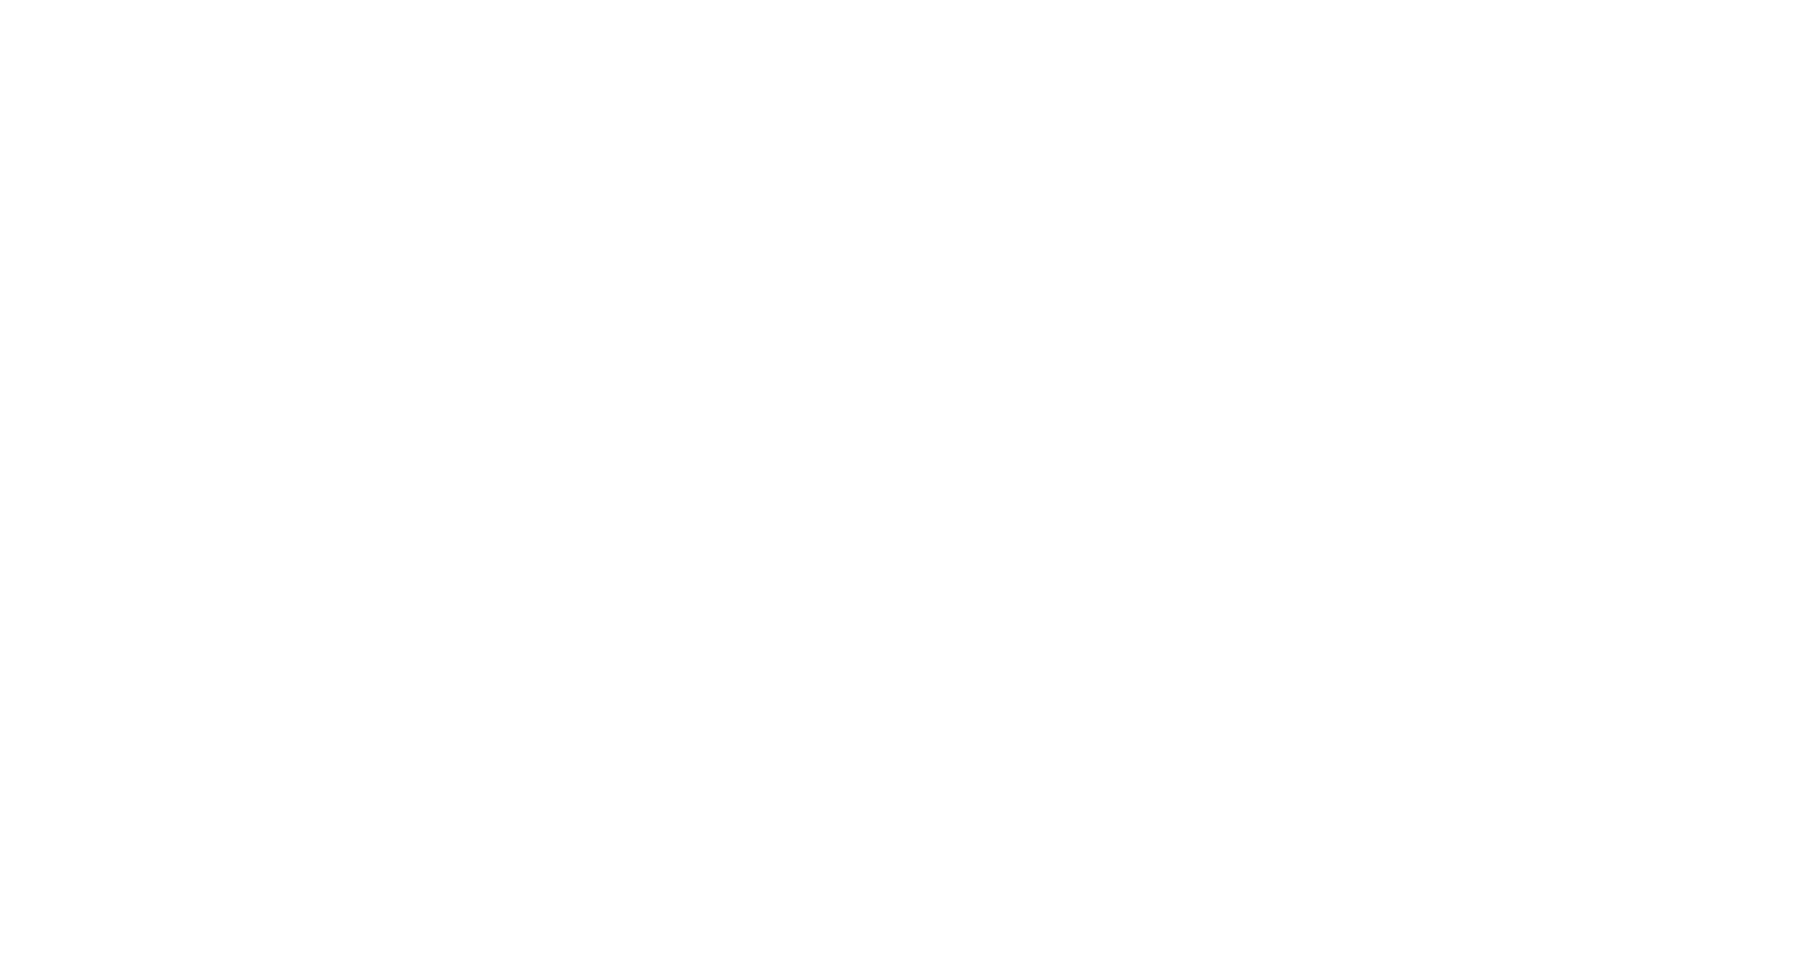 Careers at St John of God Hauora Trust